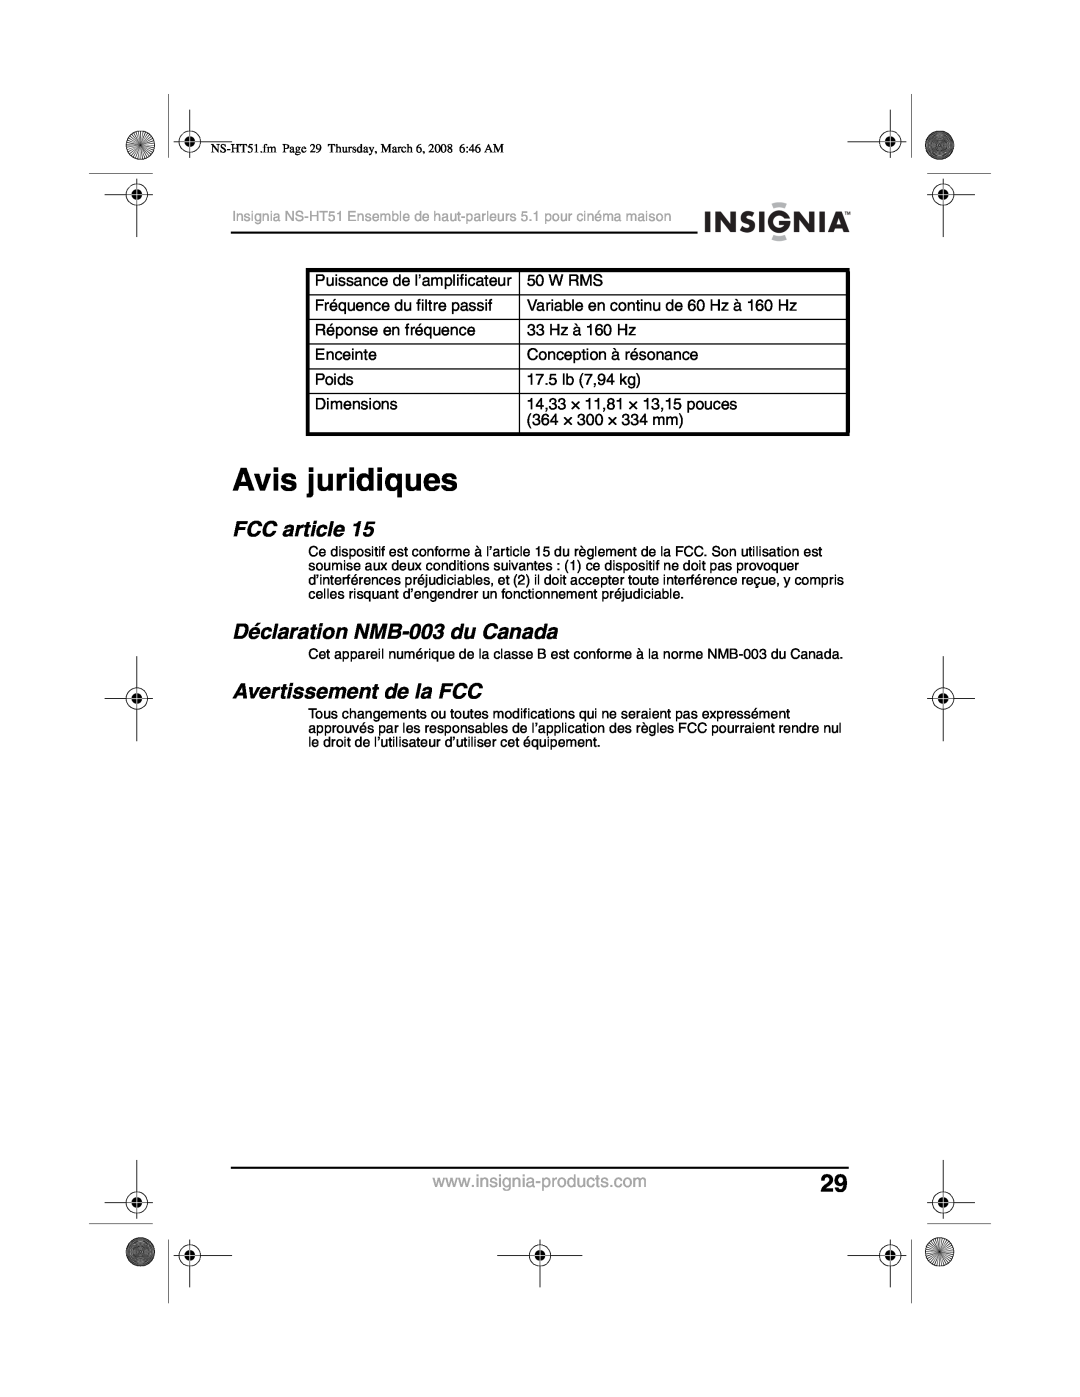 Insignia NS-HT51 manual Avis juridiques, FCC article, Déclaration NMB-003du Canada, Avertissement de la FCC 